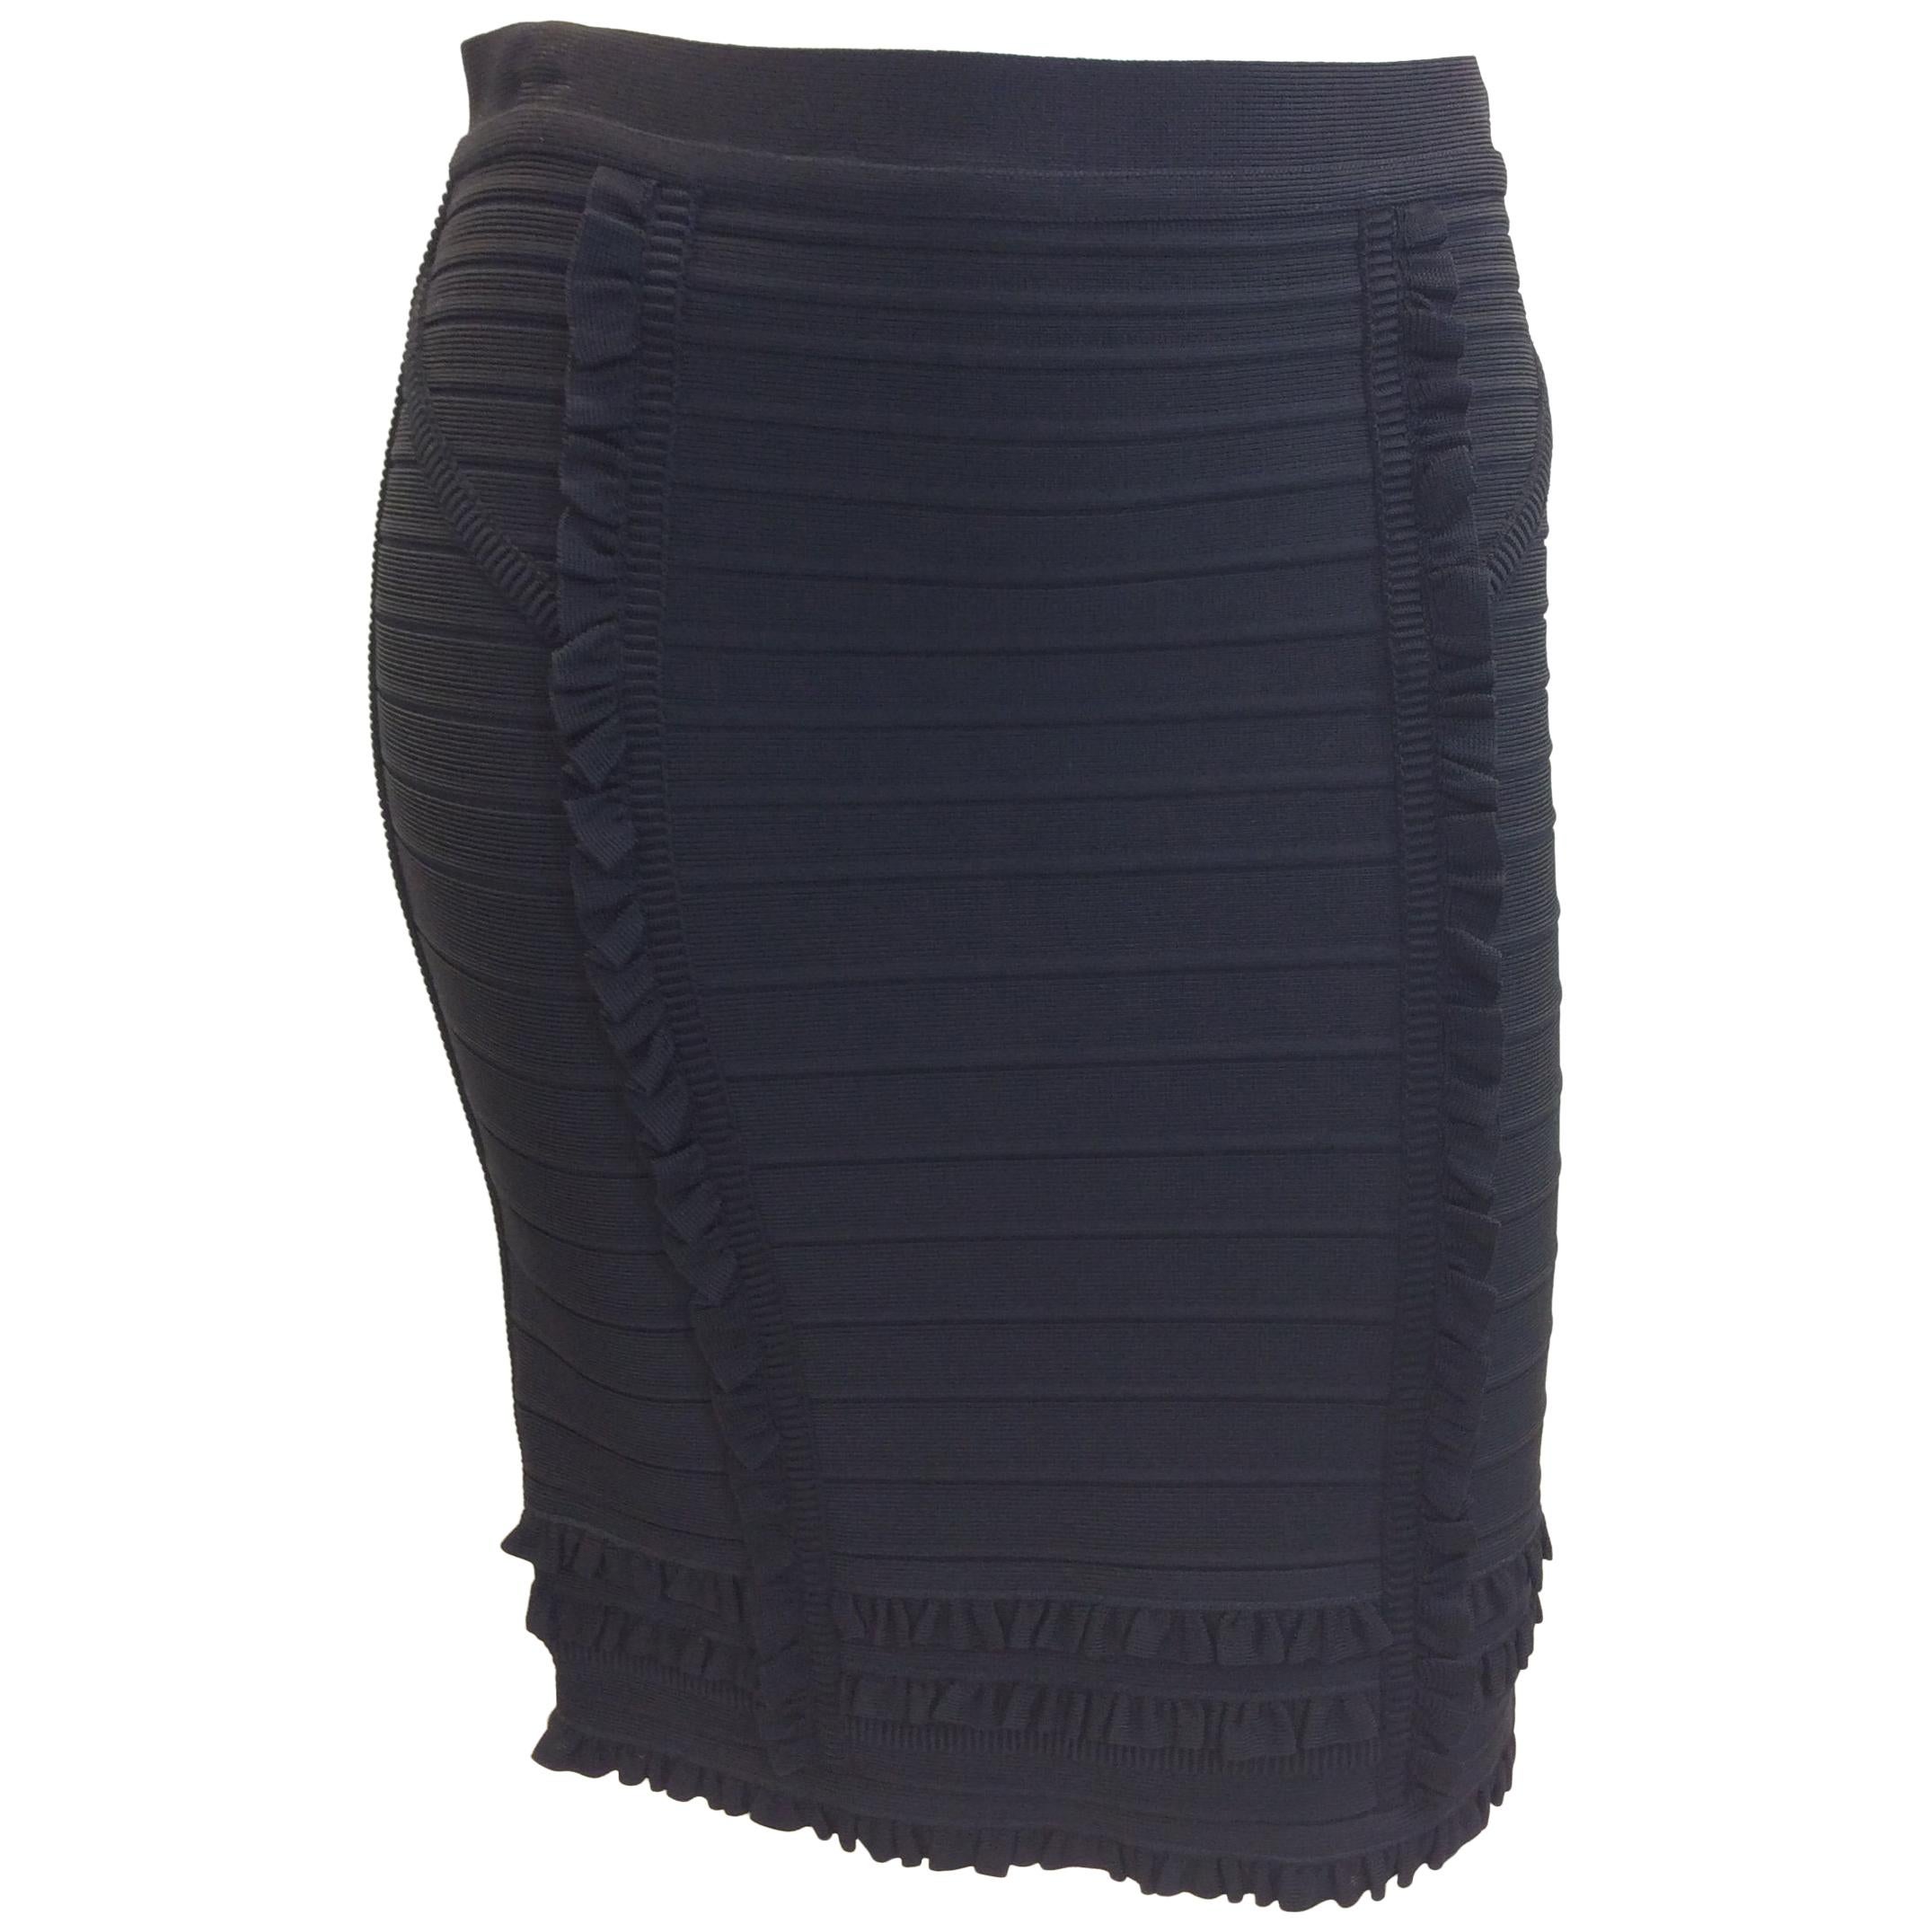 Herve Leger Black Ruffle Skirt NWT For Sale